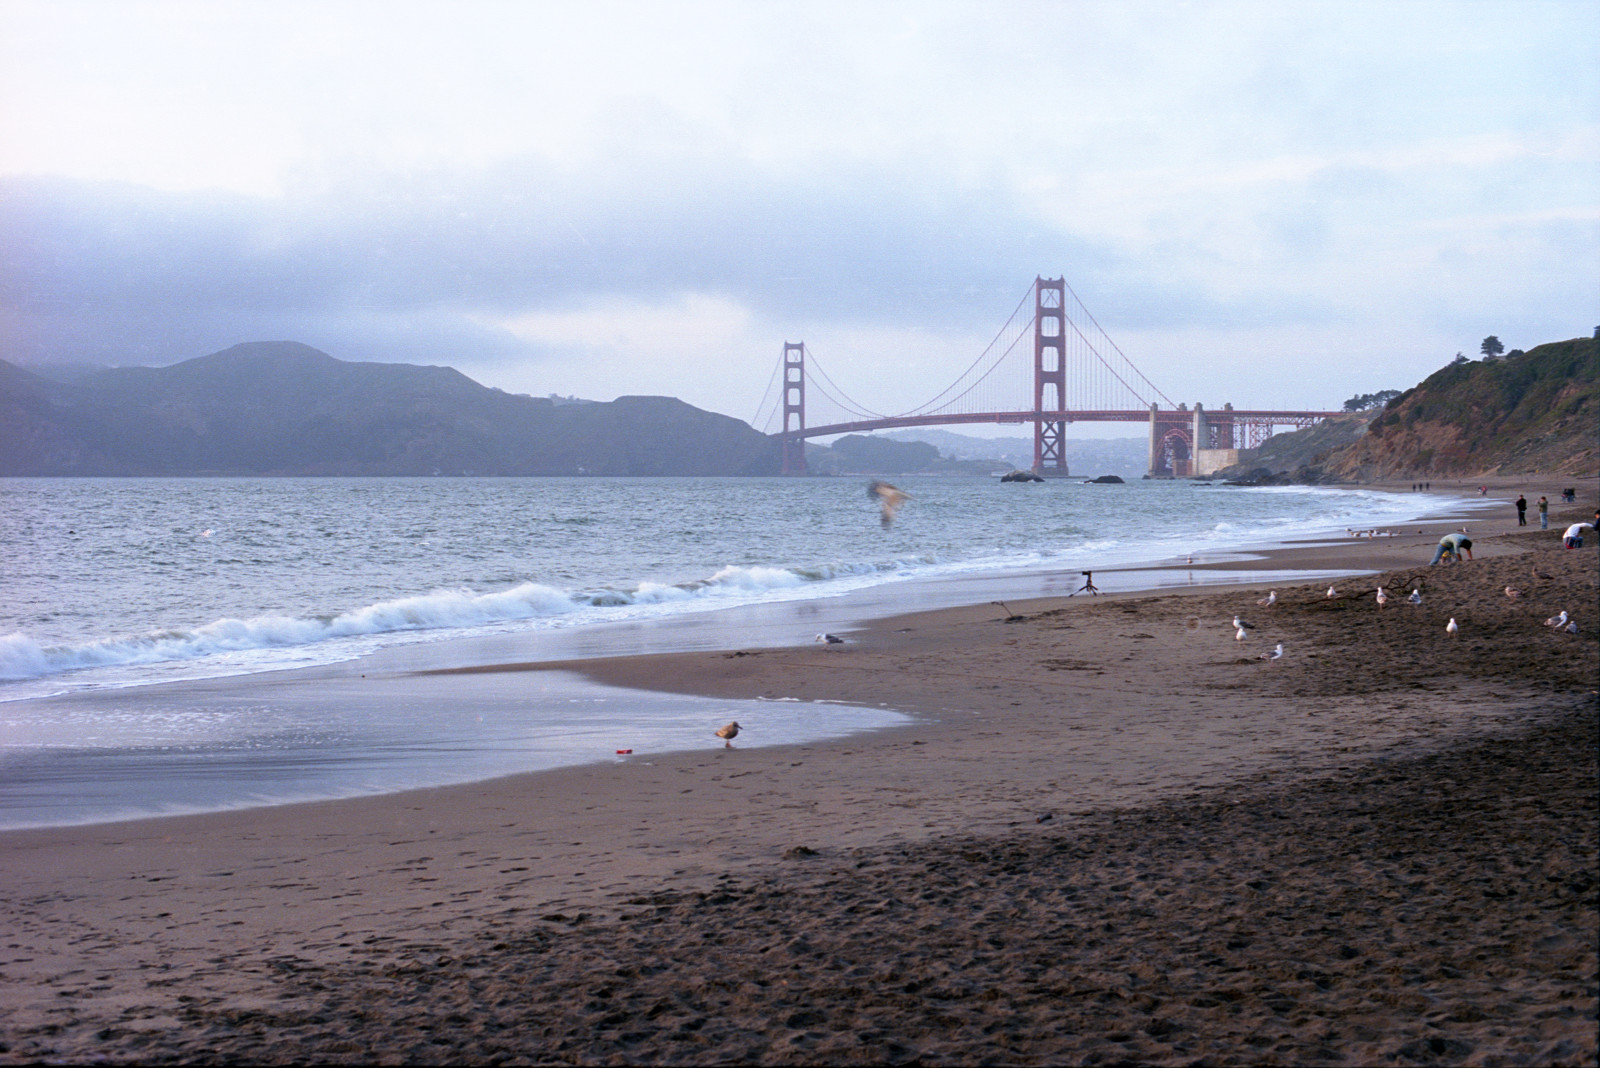 View from Baker Beach to Golden Gate Bridge, San Francisco.